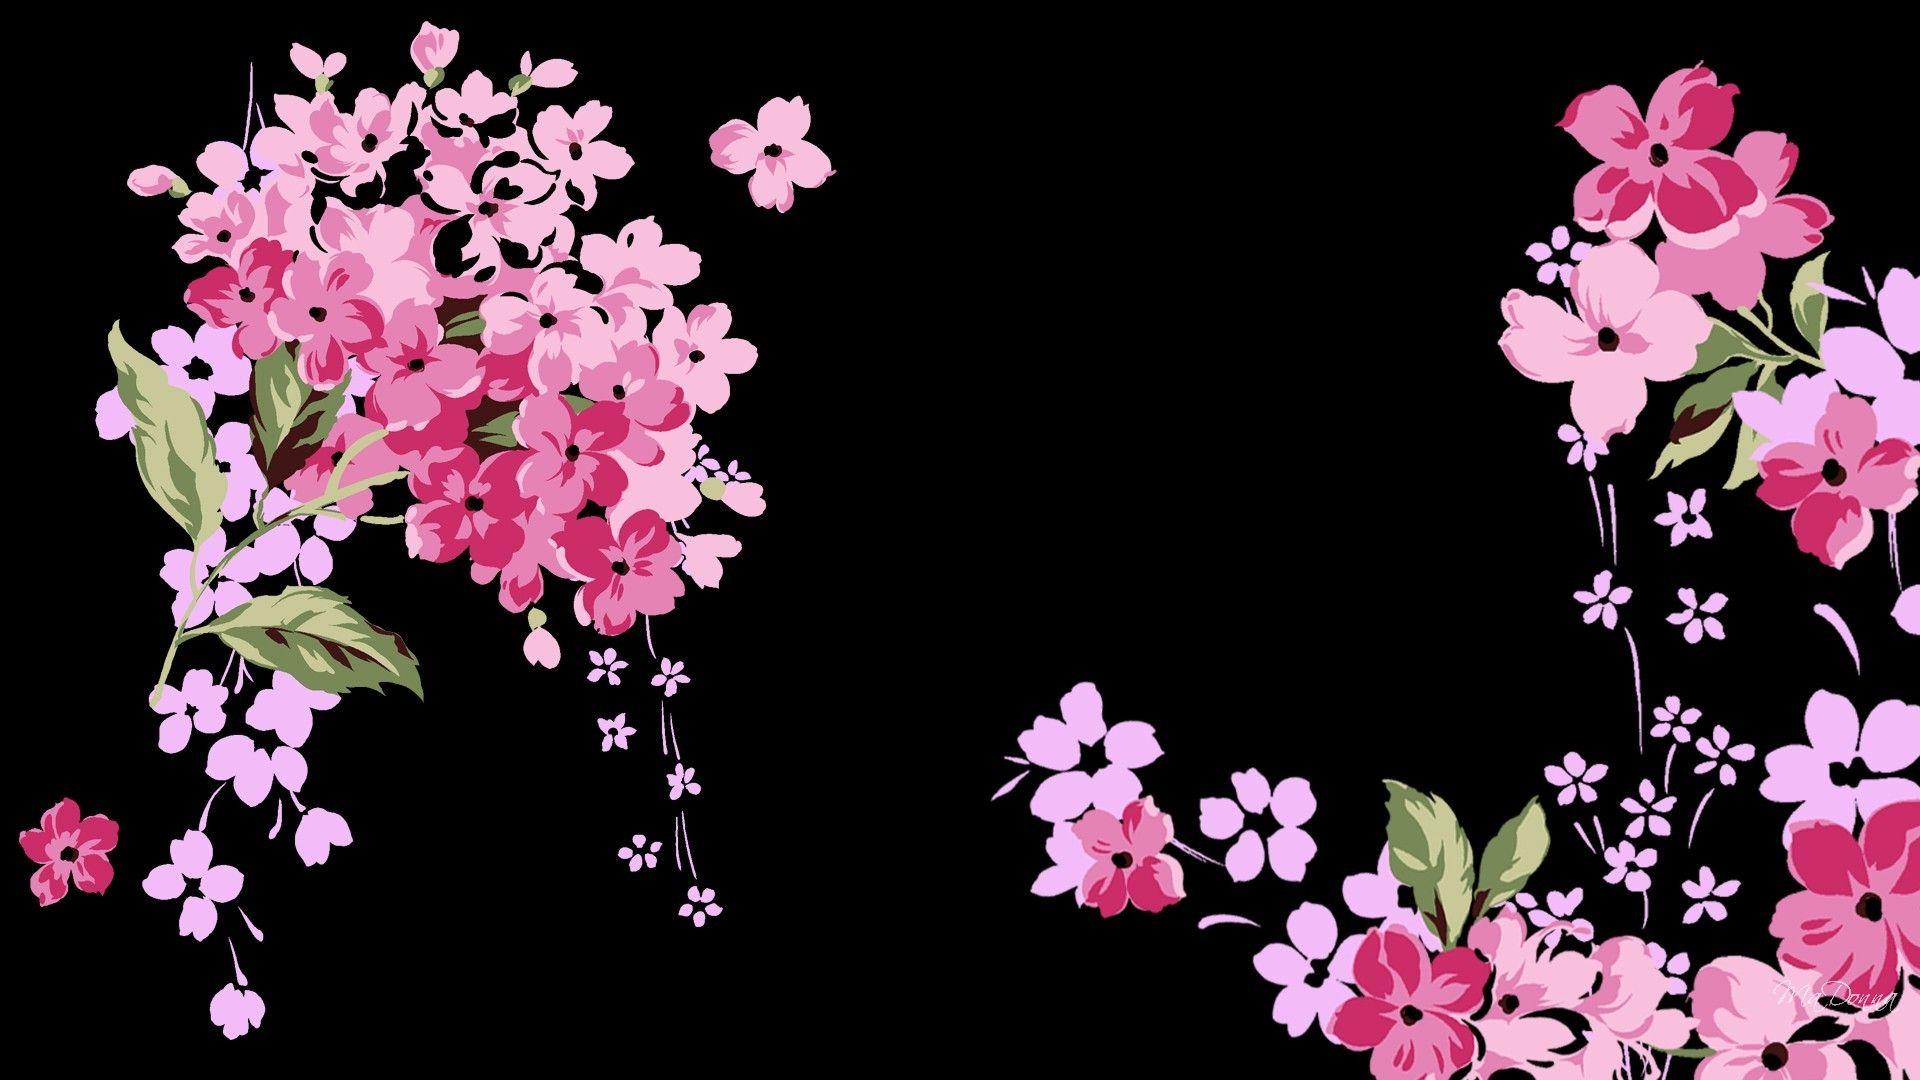 Flower: Pink Explosion Flowers Floral Abstract Black Landscape